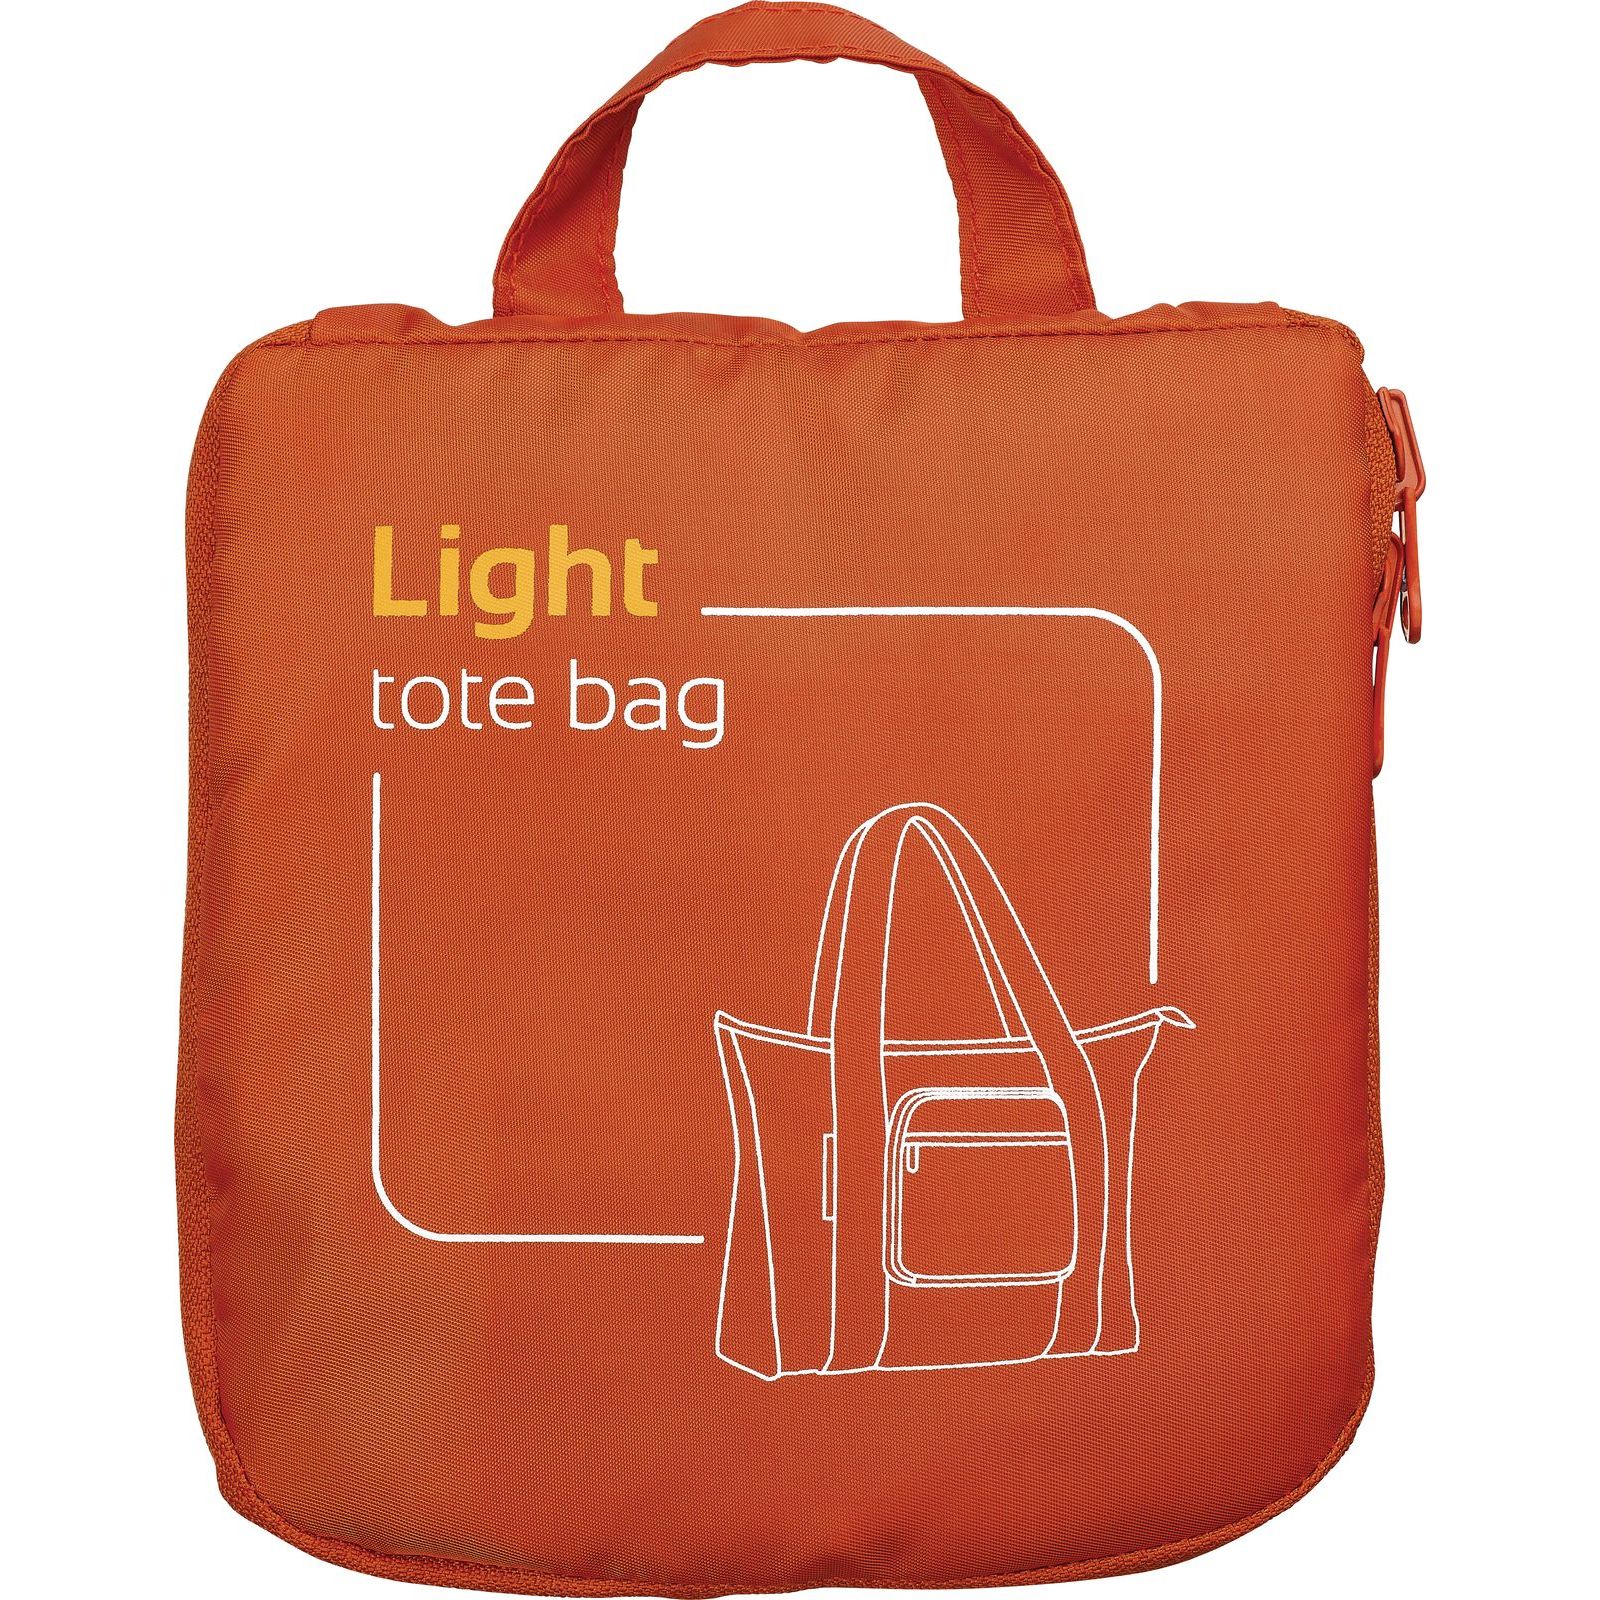 Tote Bag (Light)